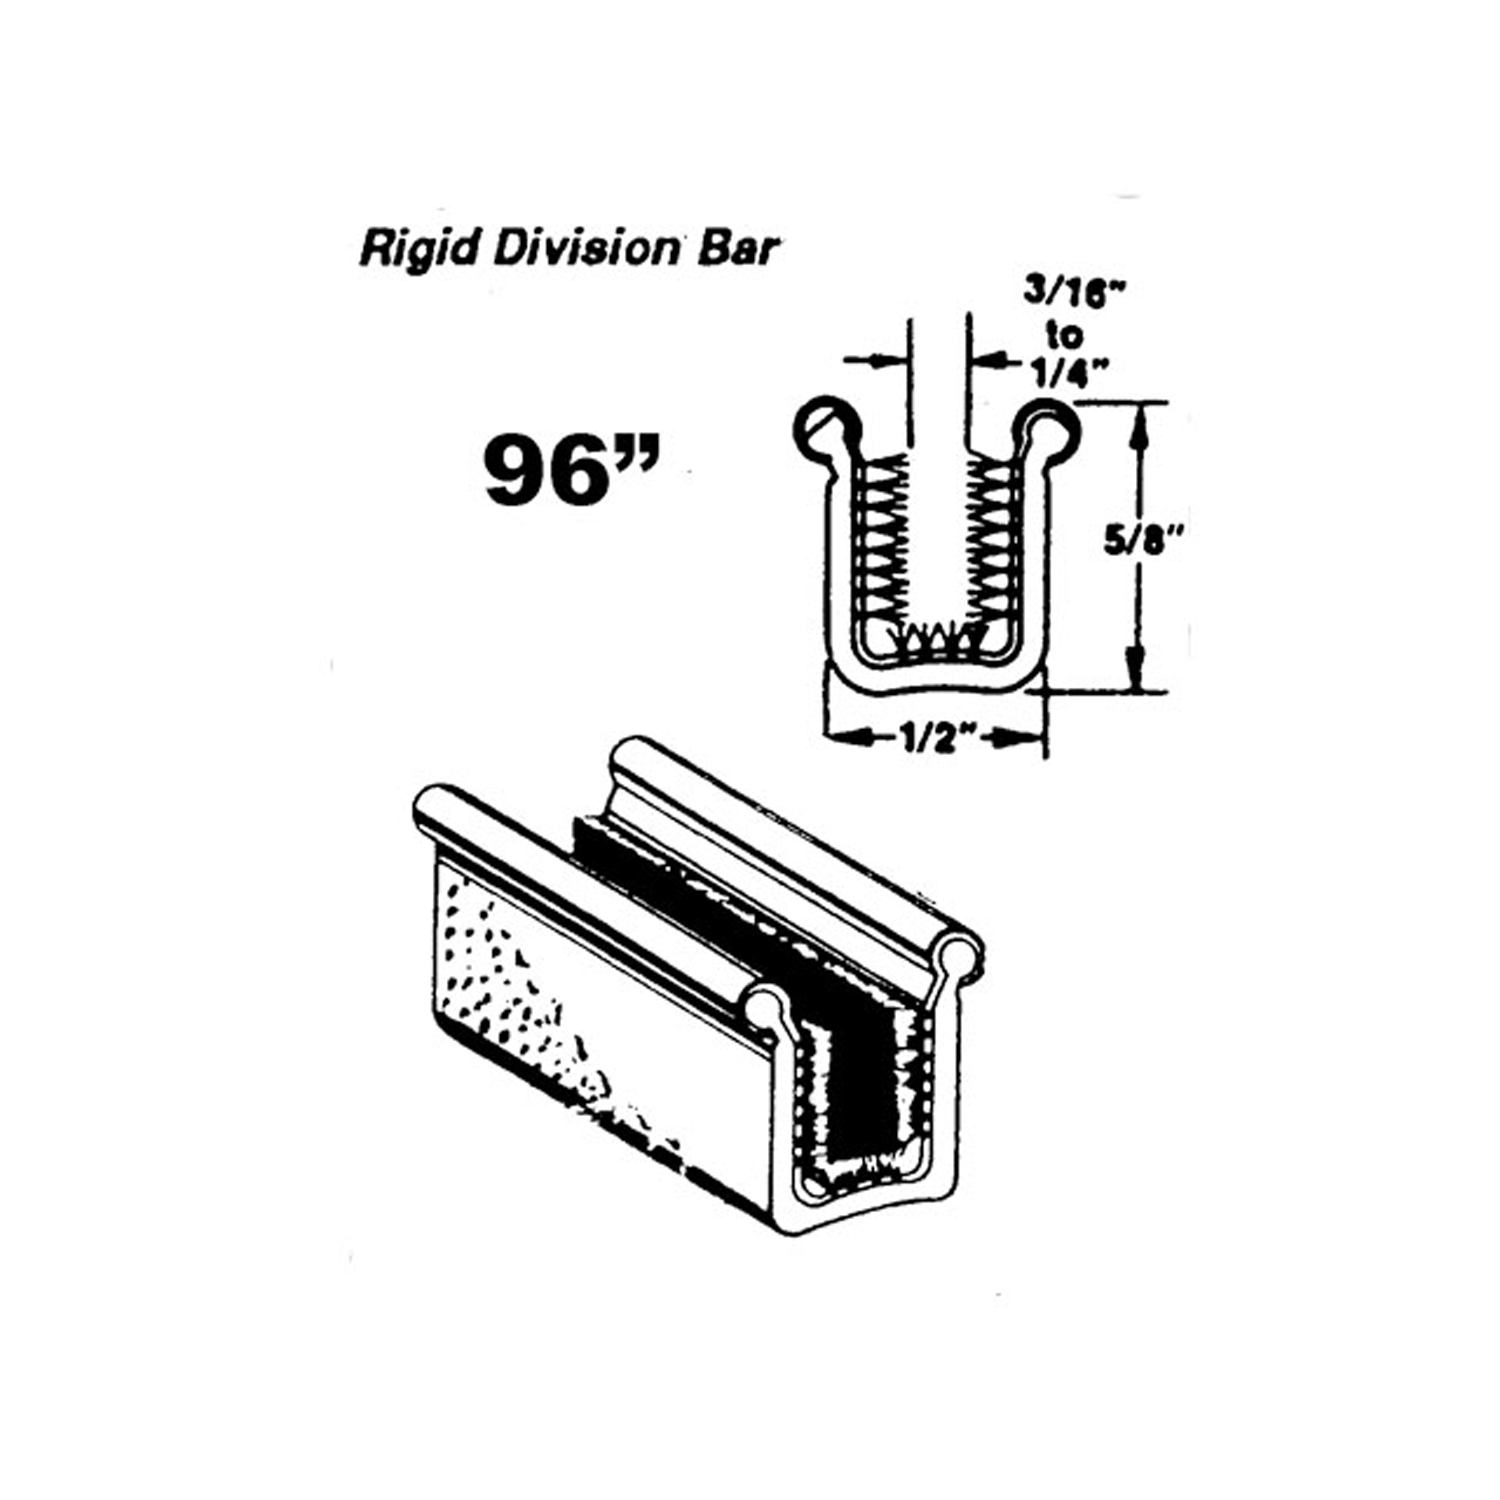 1961 Ford Galaxie Rigid division-bar channel-WC 28-96